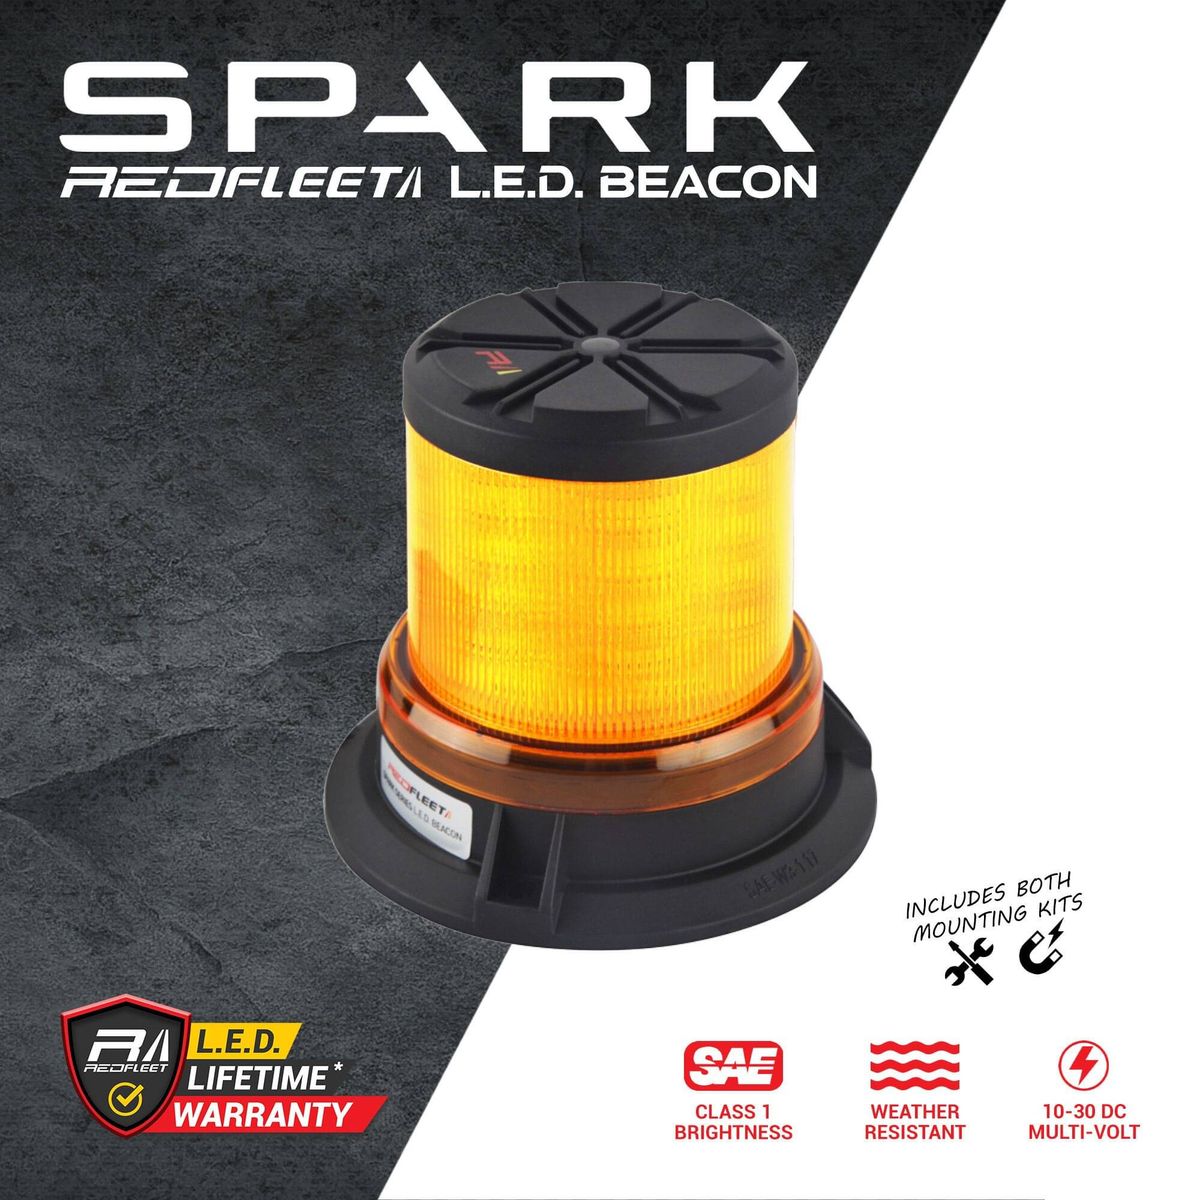 REDFLEET  SPARK Series 24 L.E.D. Amber Beacon Flashing & Rotating​ Light  SAE CLASS 1, L.E.D. Beacon Lights